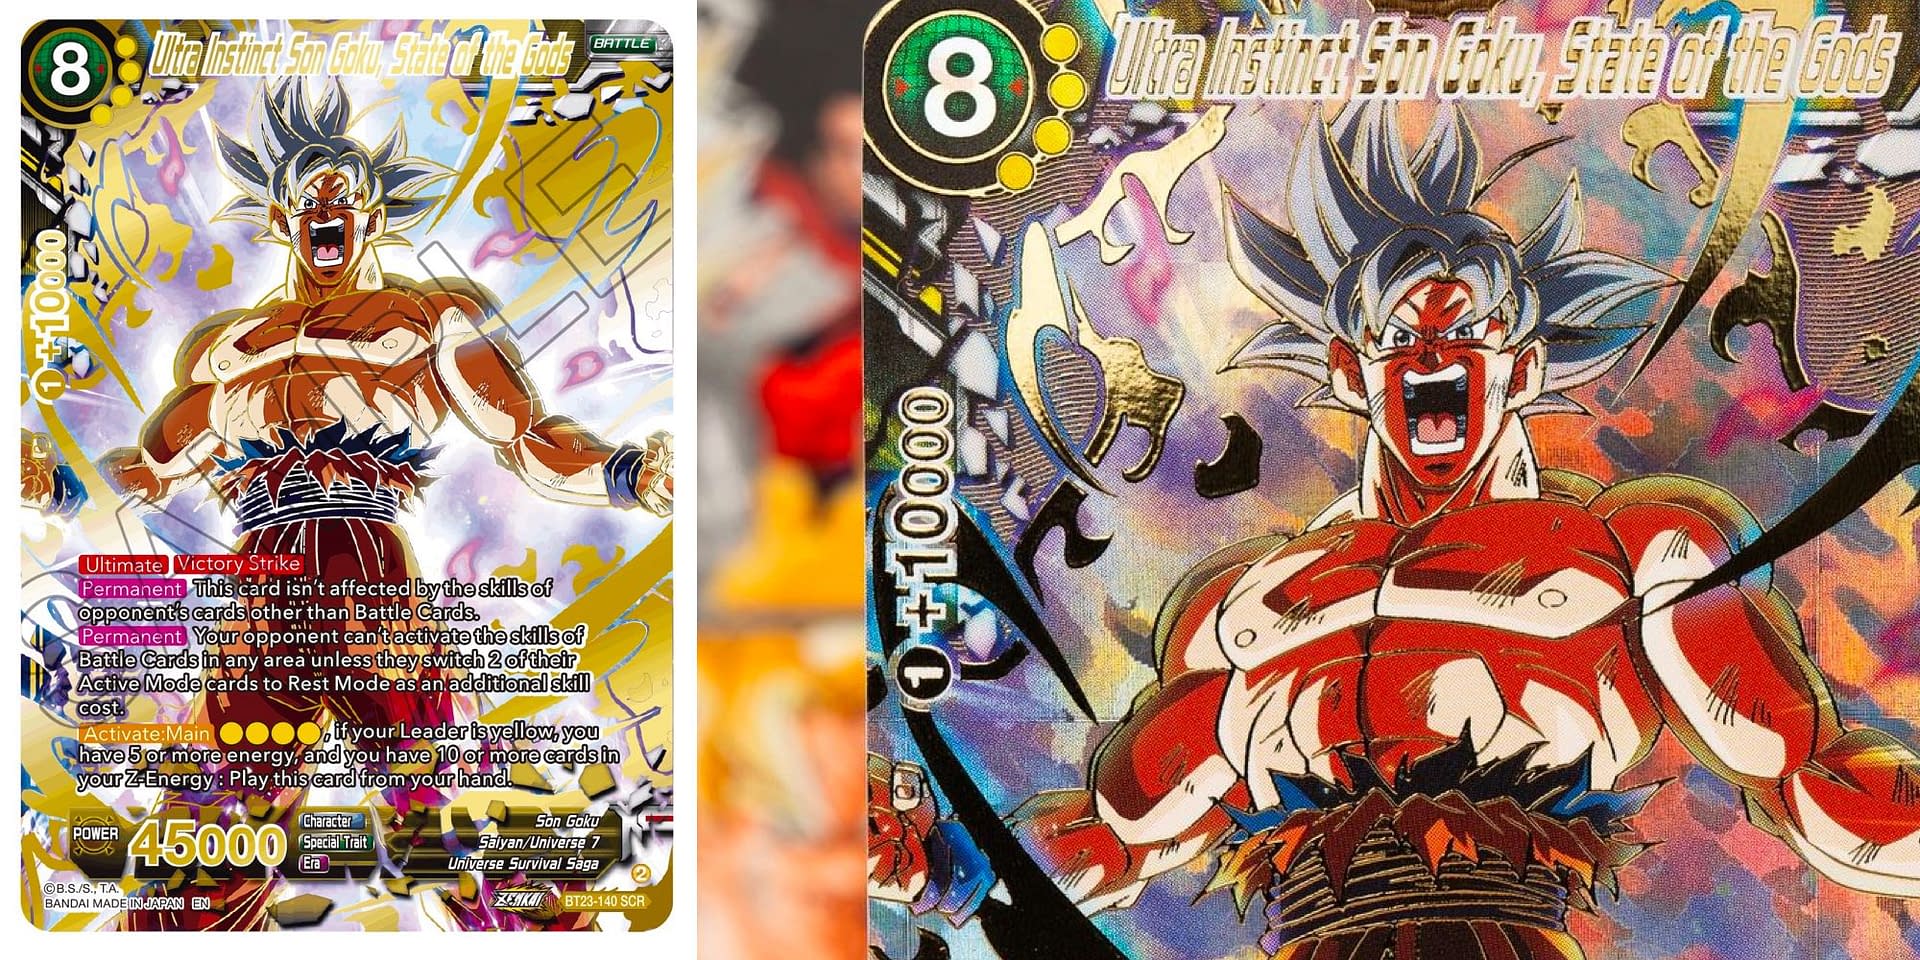 Son Goku - Super Saiyan 5 + Ultra Instinct looks so badass